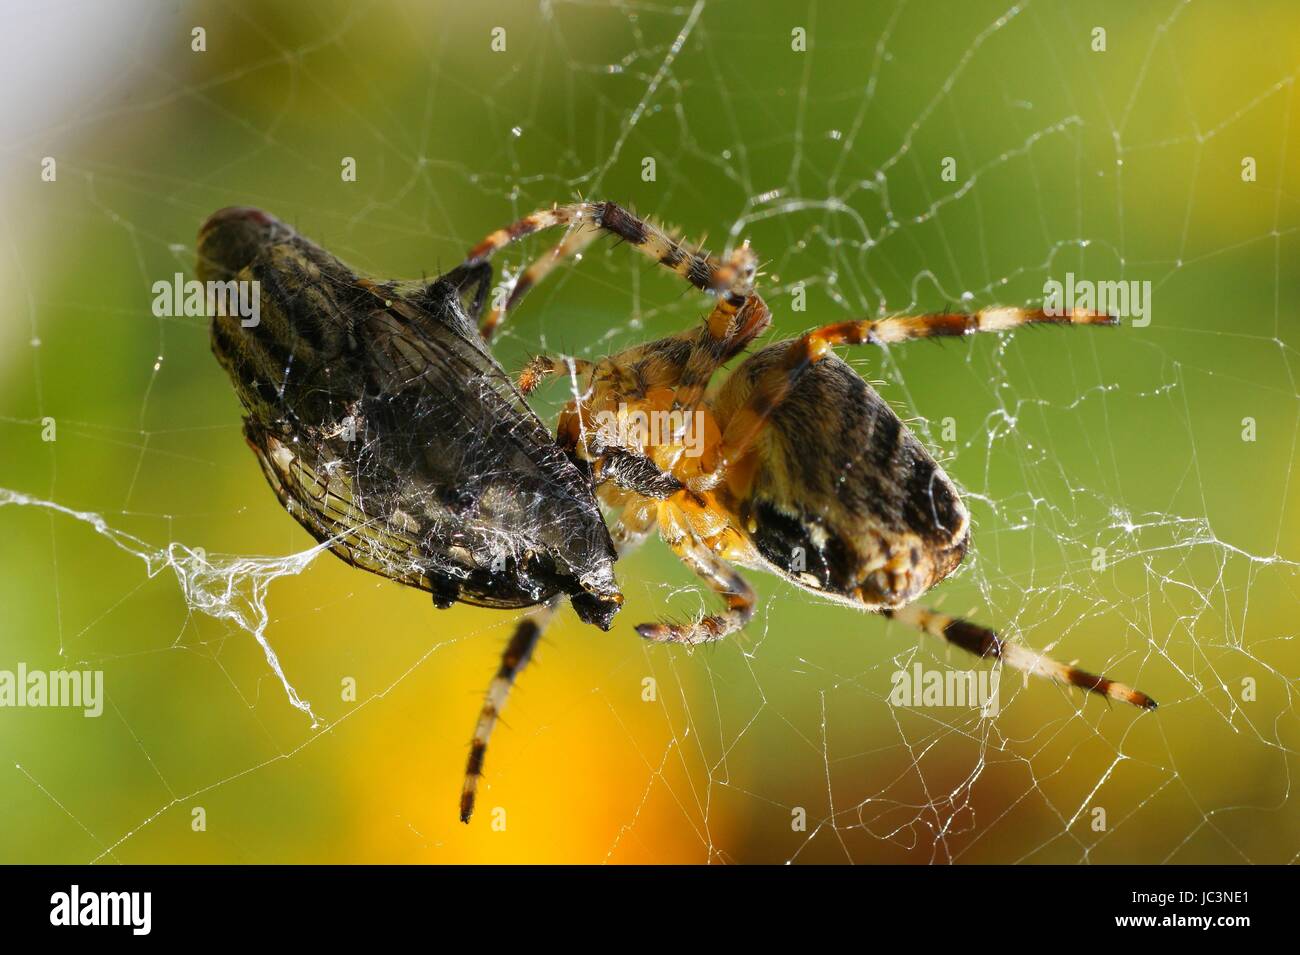 Spinne im Kokon einer Fliege Stockfotografie - Alamy